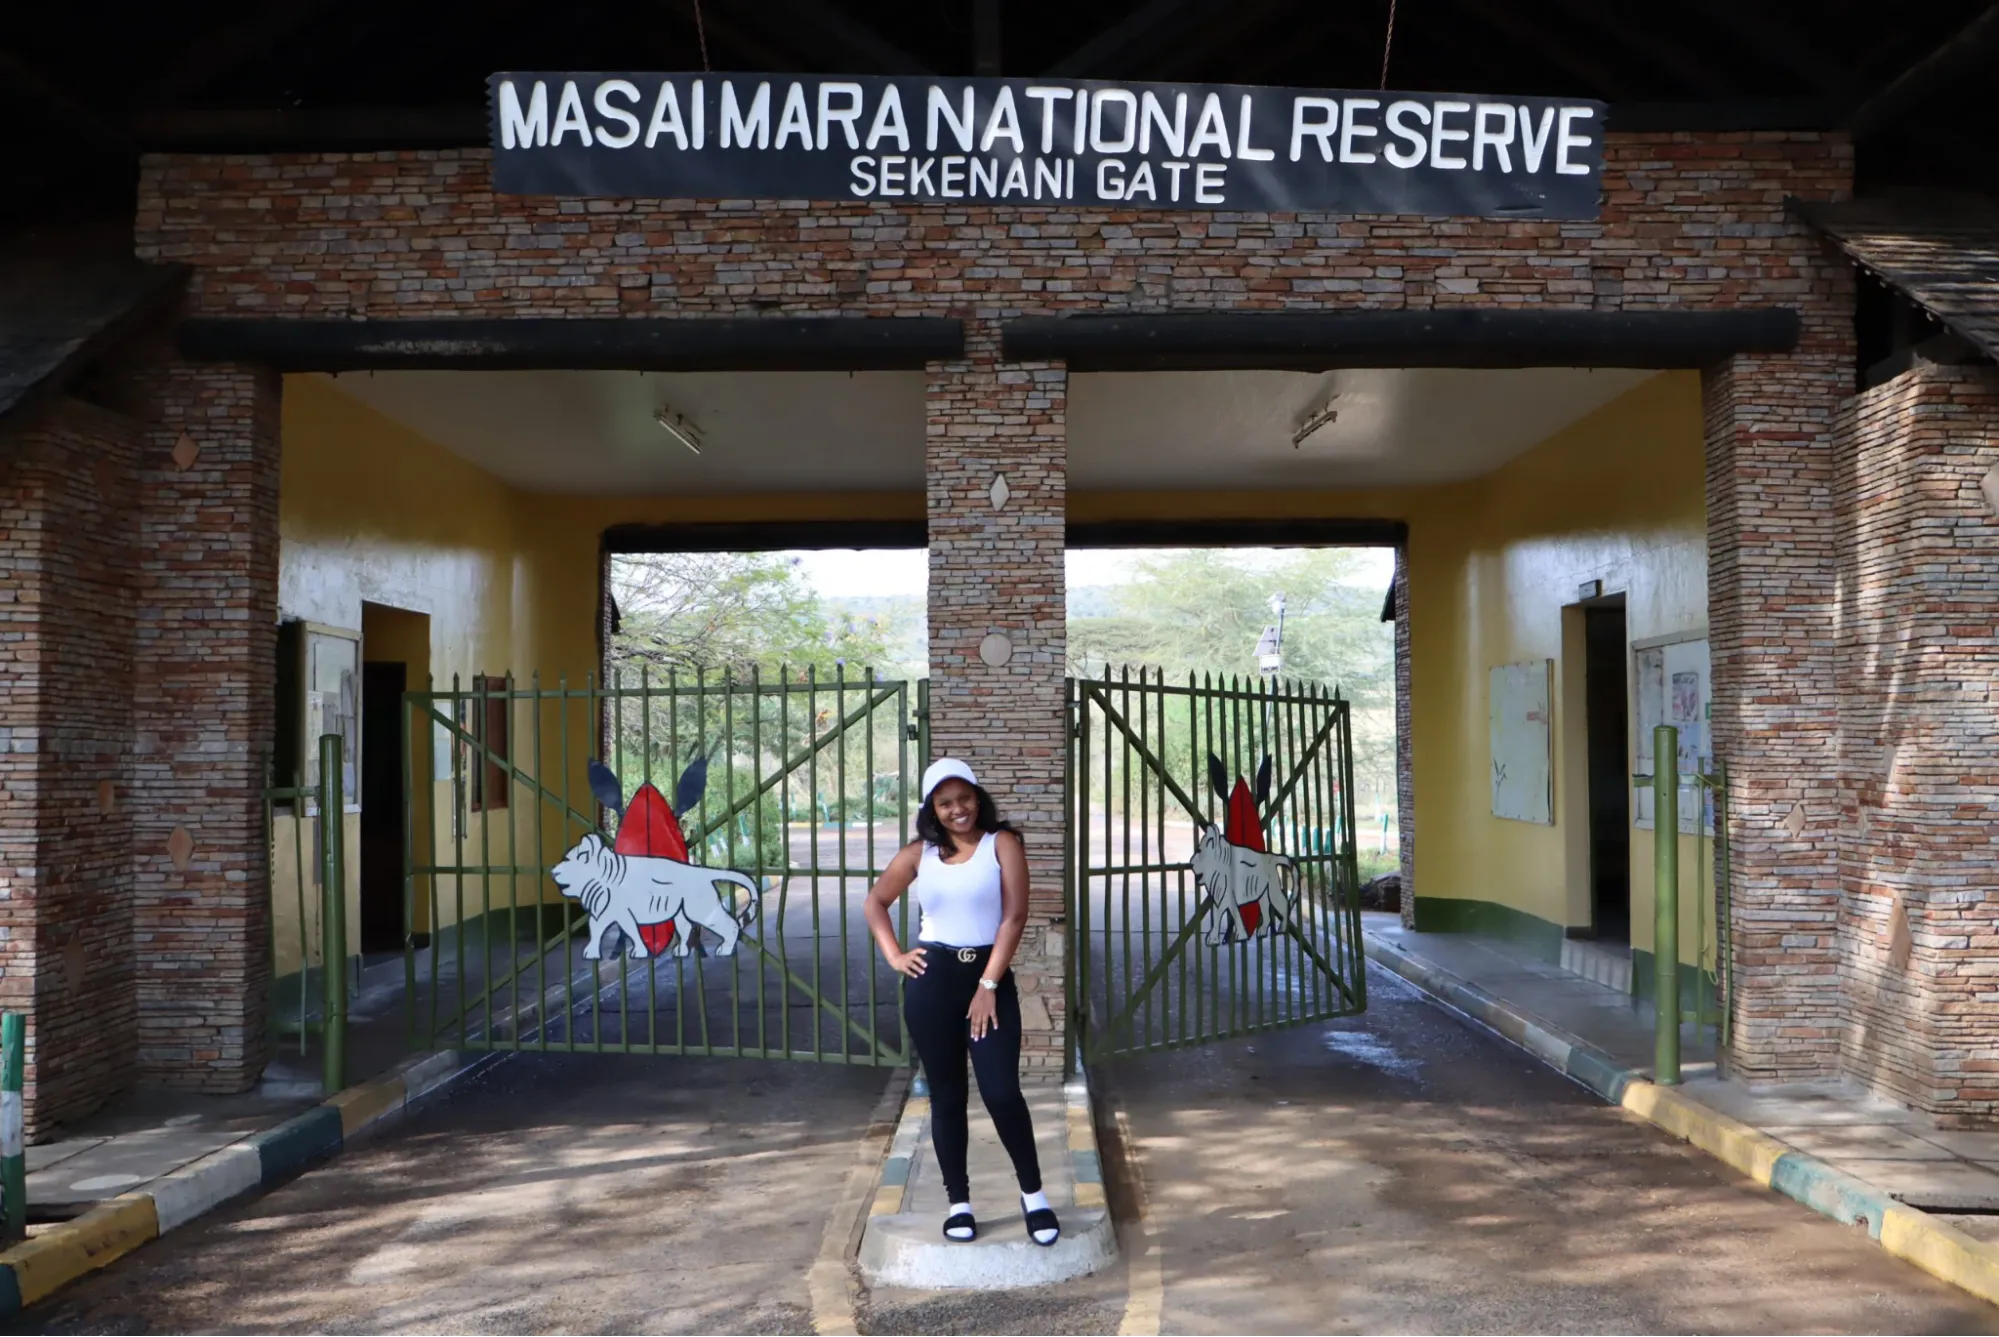 Planning a 4-day safari Kenya adventure - Sekenani Entrance Gate to Masai Mara